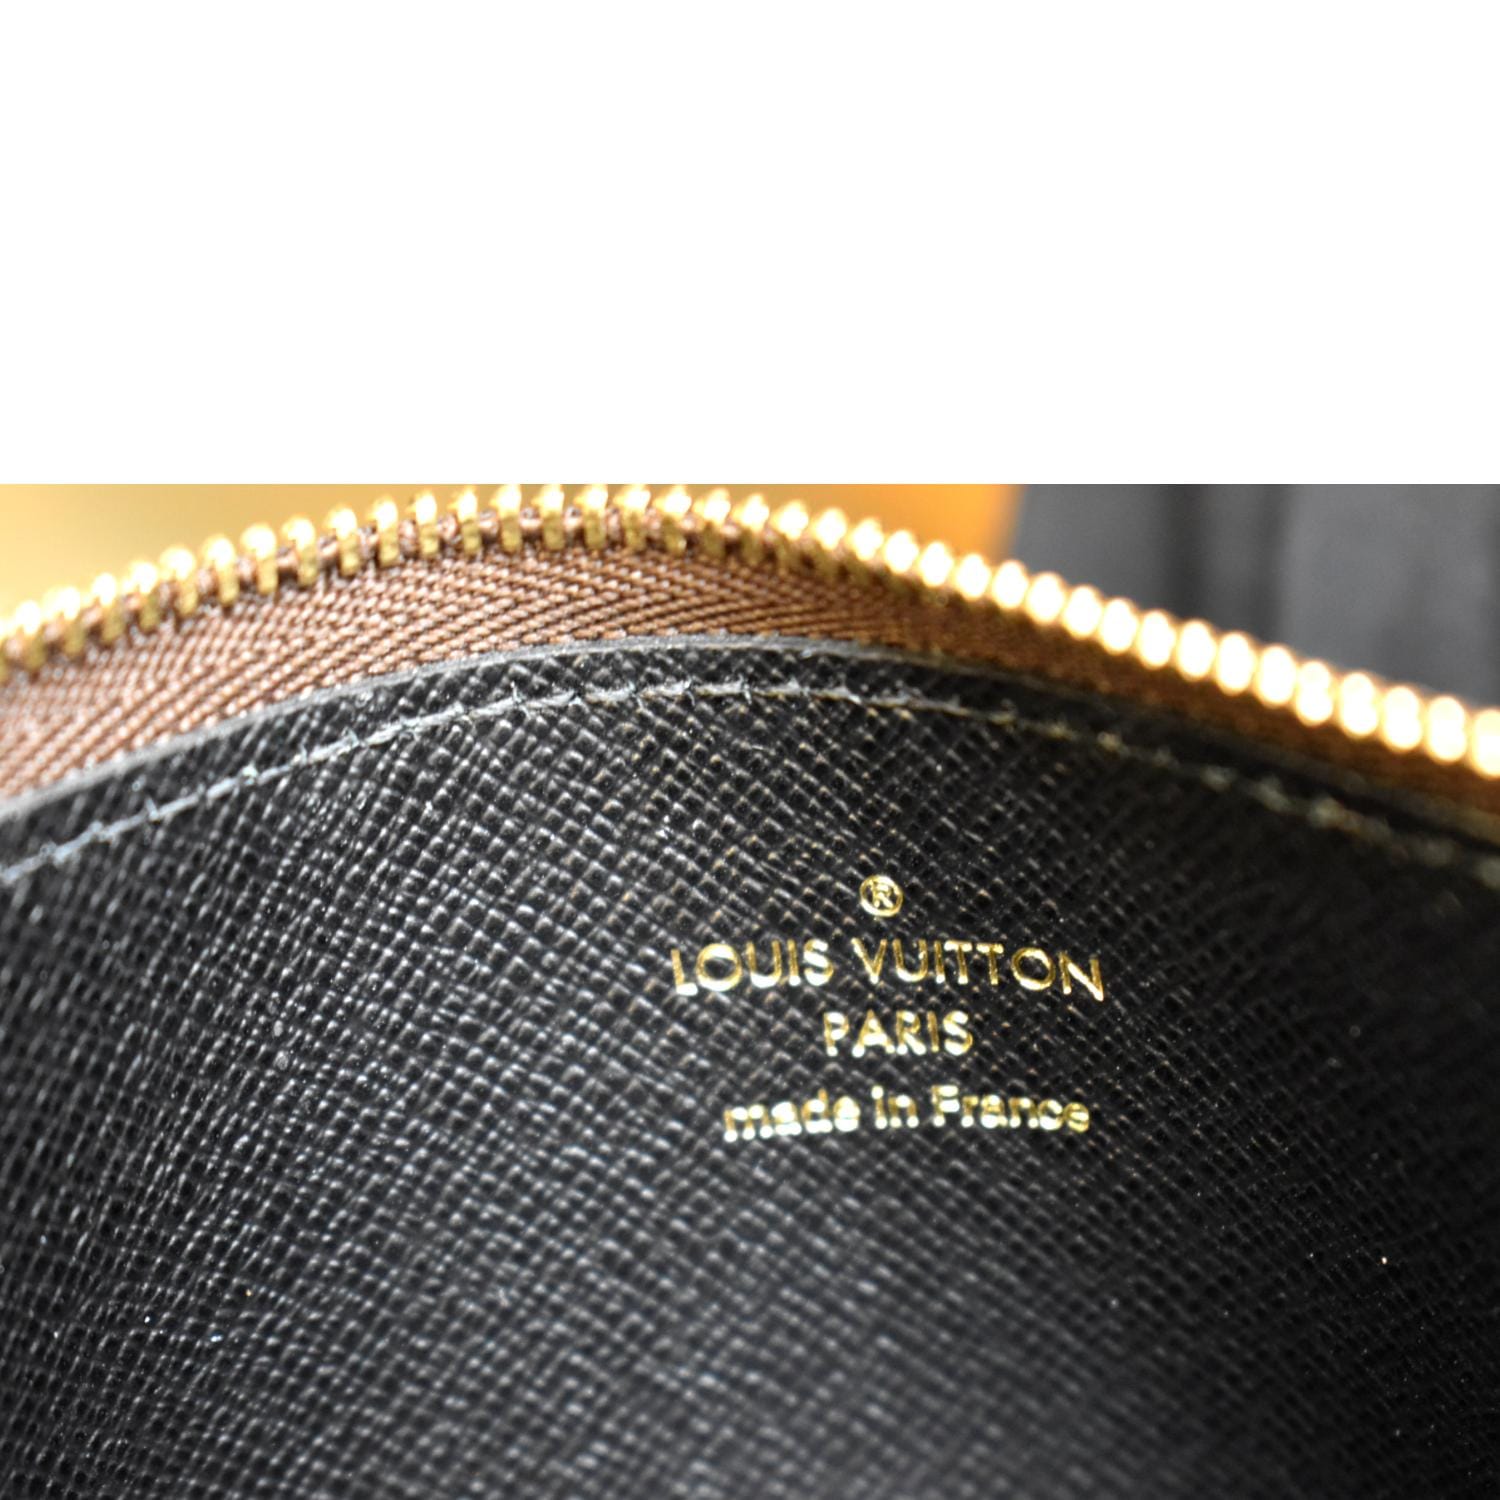 Louis Vuitton Trio Pouch w/ Tags